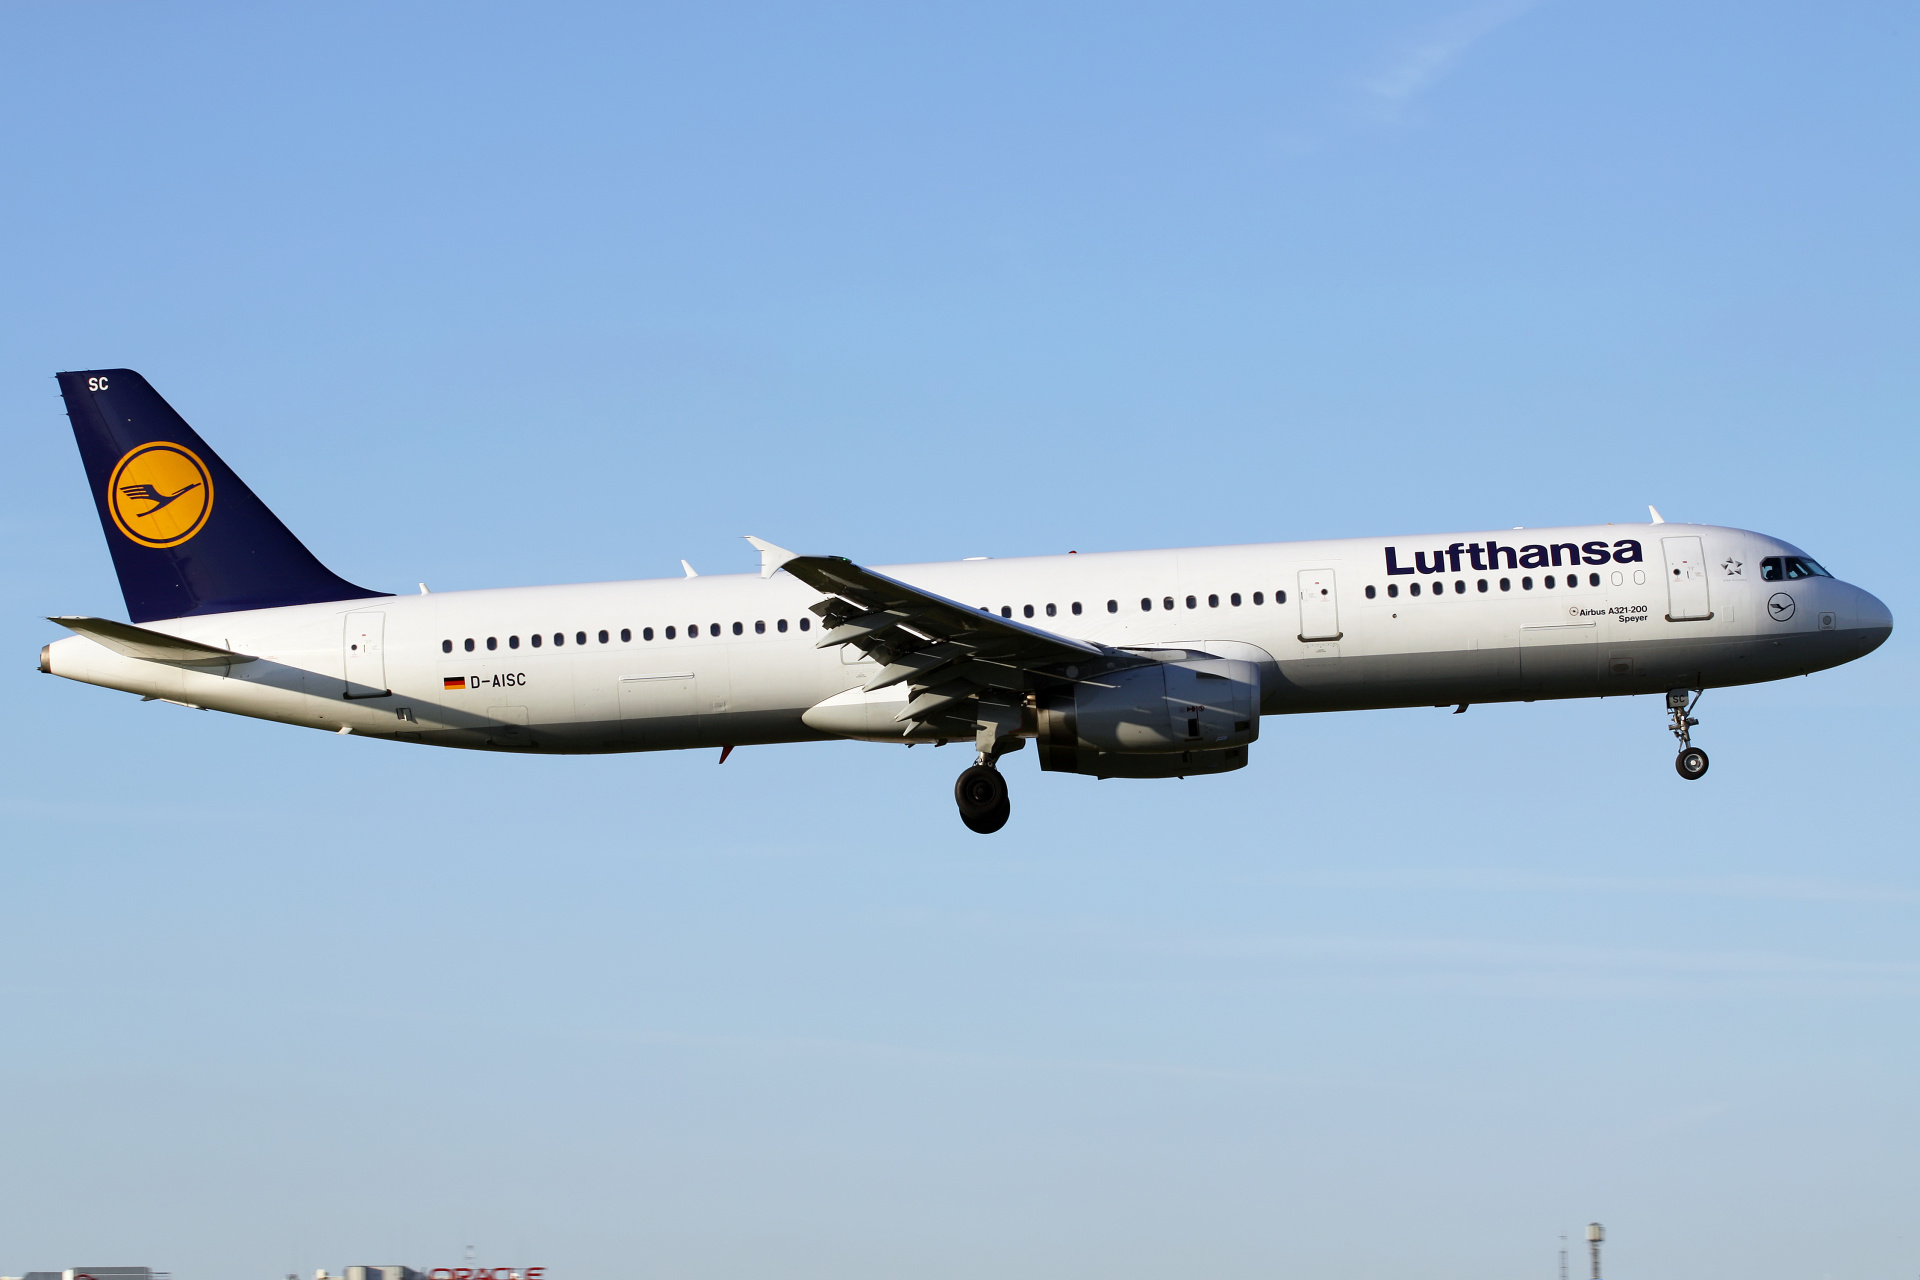 D-AISC (Aircraft » EPWA Spotting » Airbus A321-200 » Lufthansa)